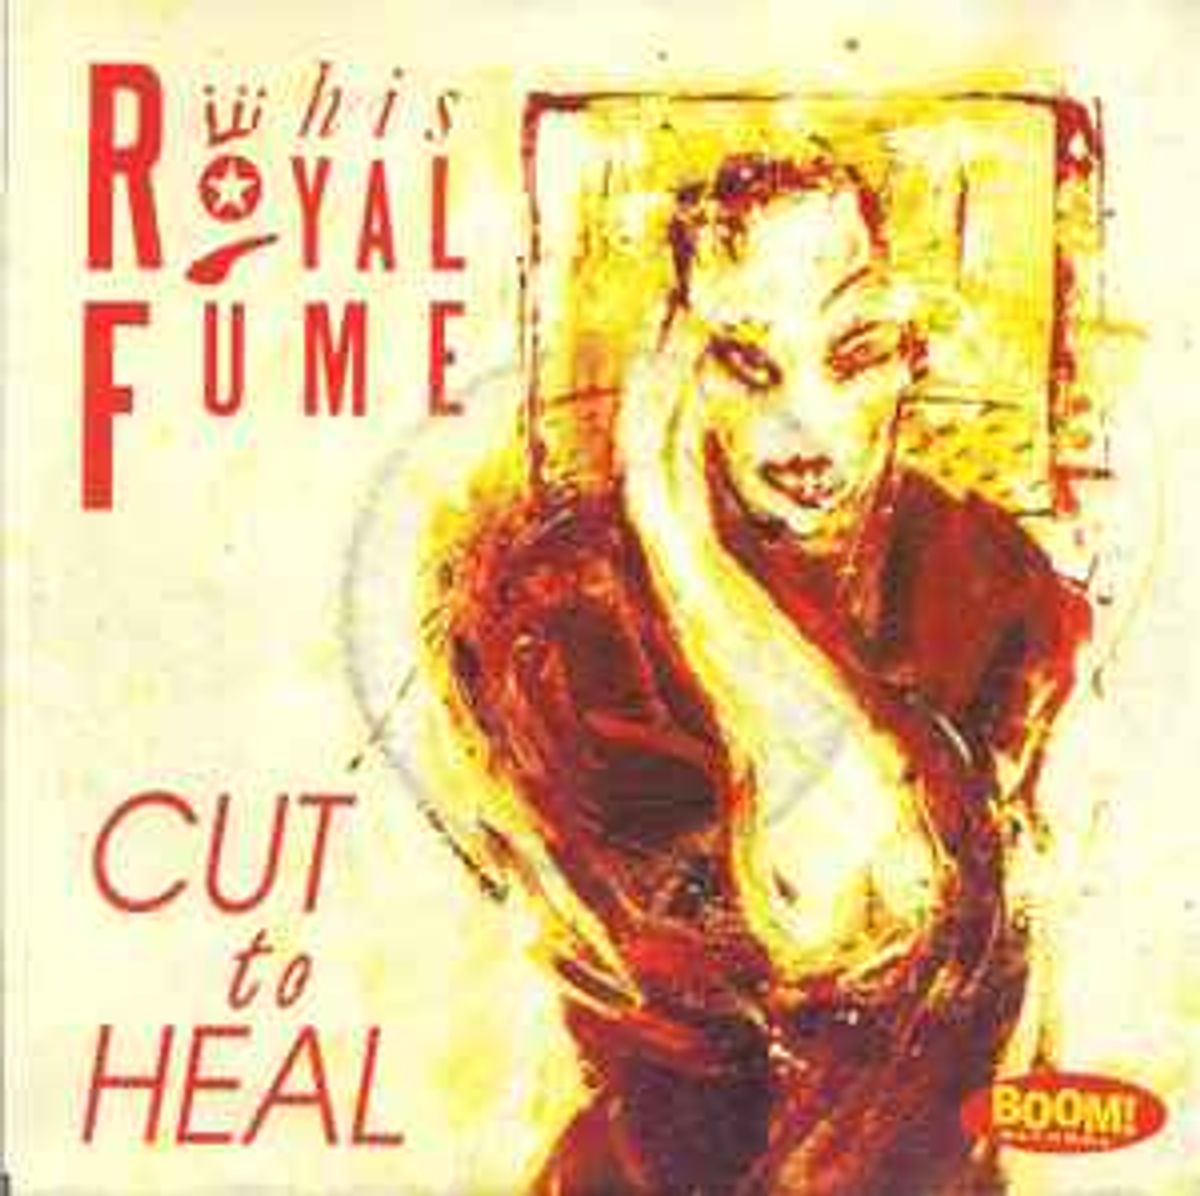 #WVDBM23 - His Royal Fume - Cut To Heal (1991)